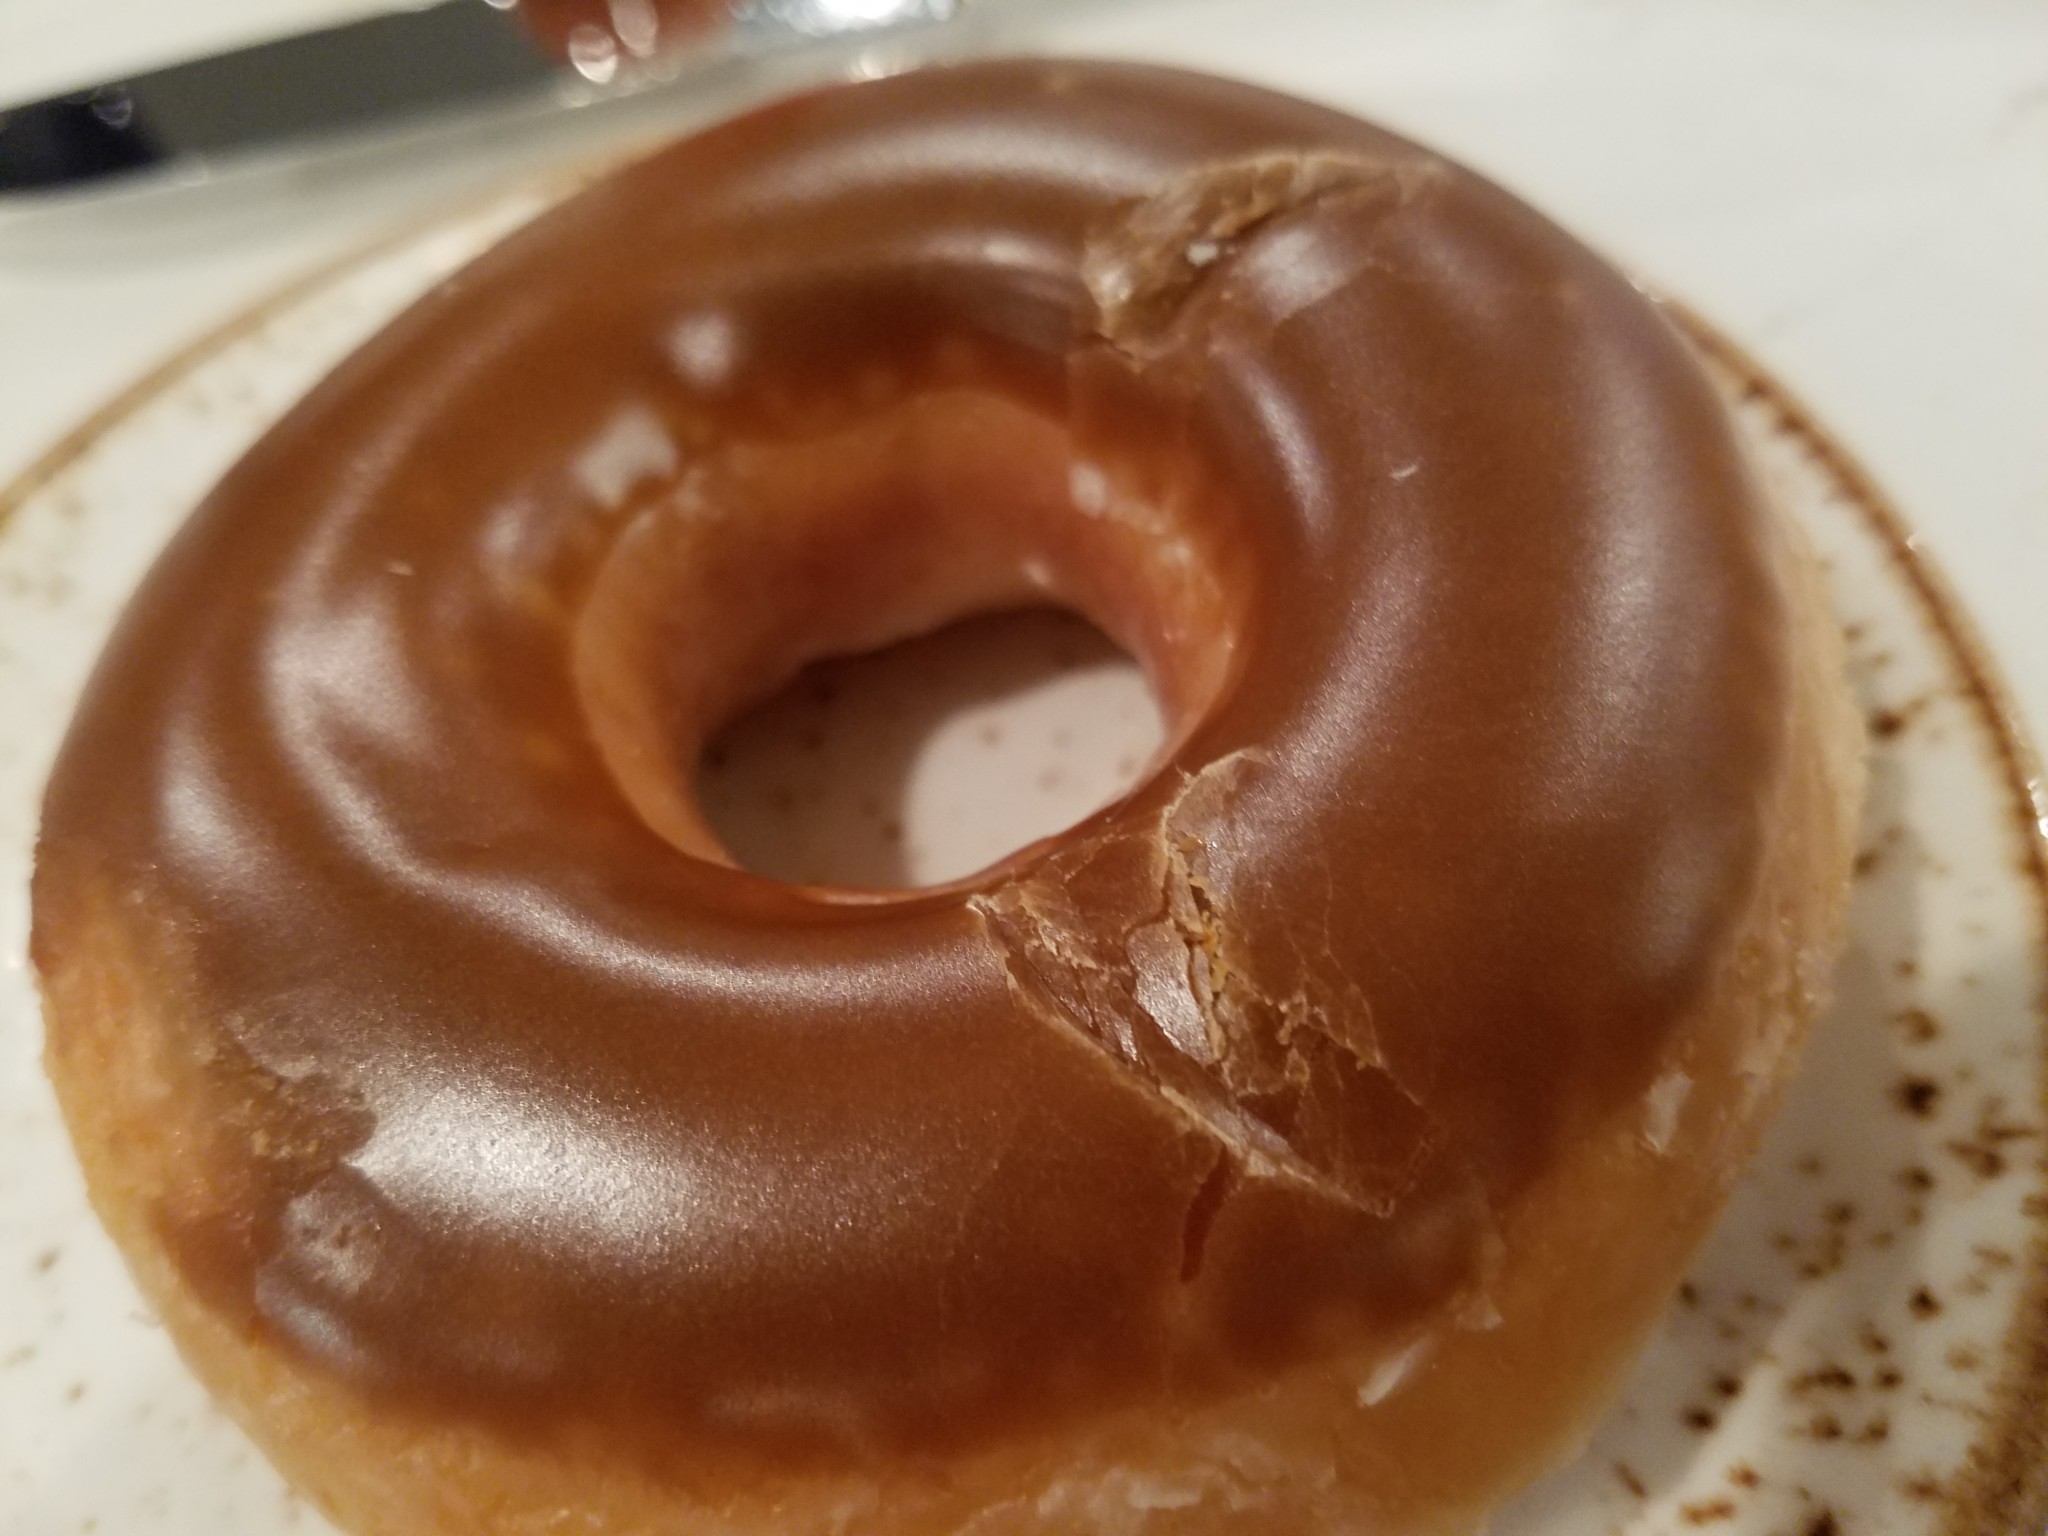 The doughnut 